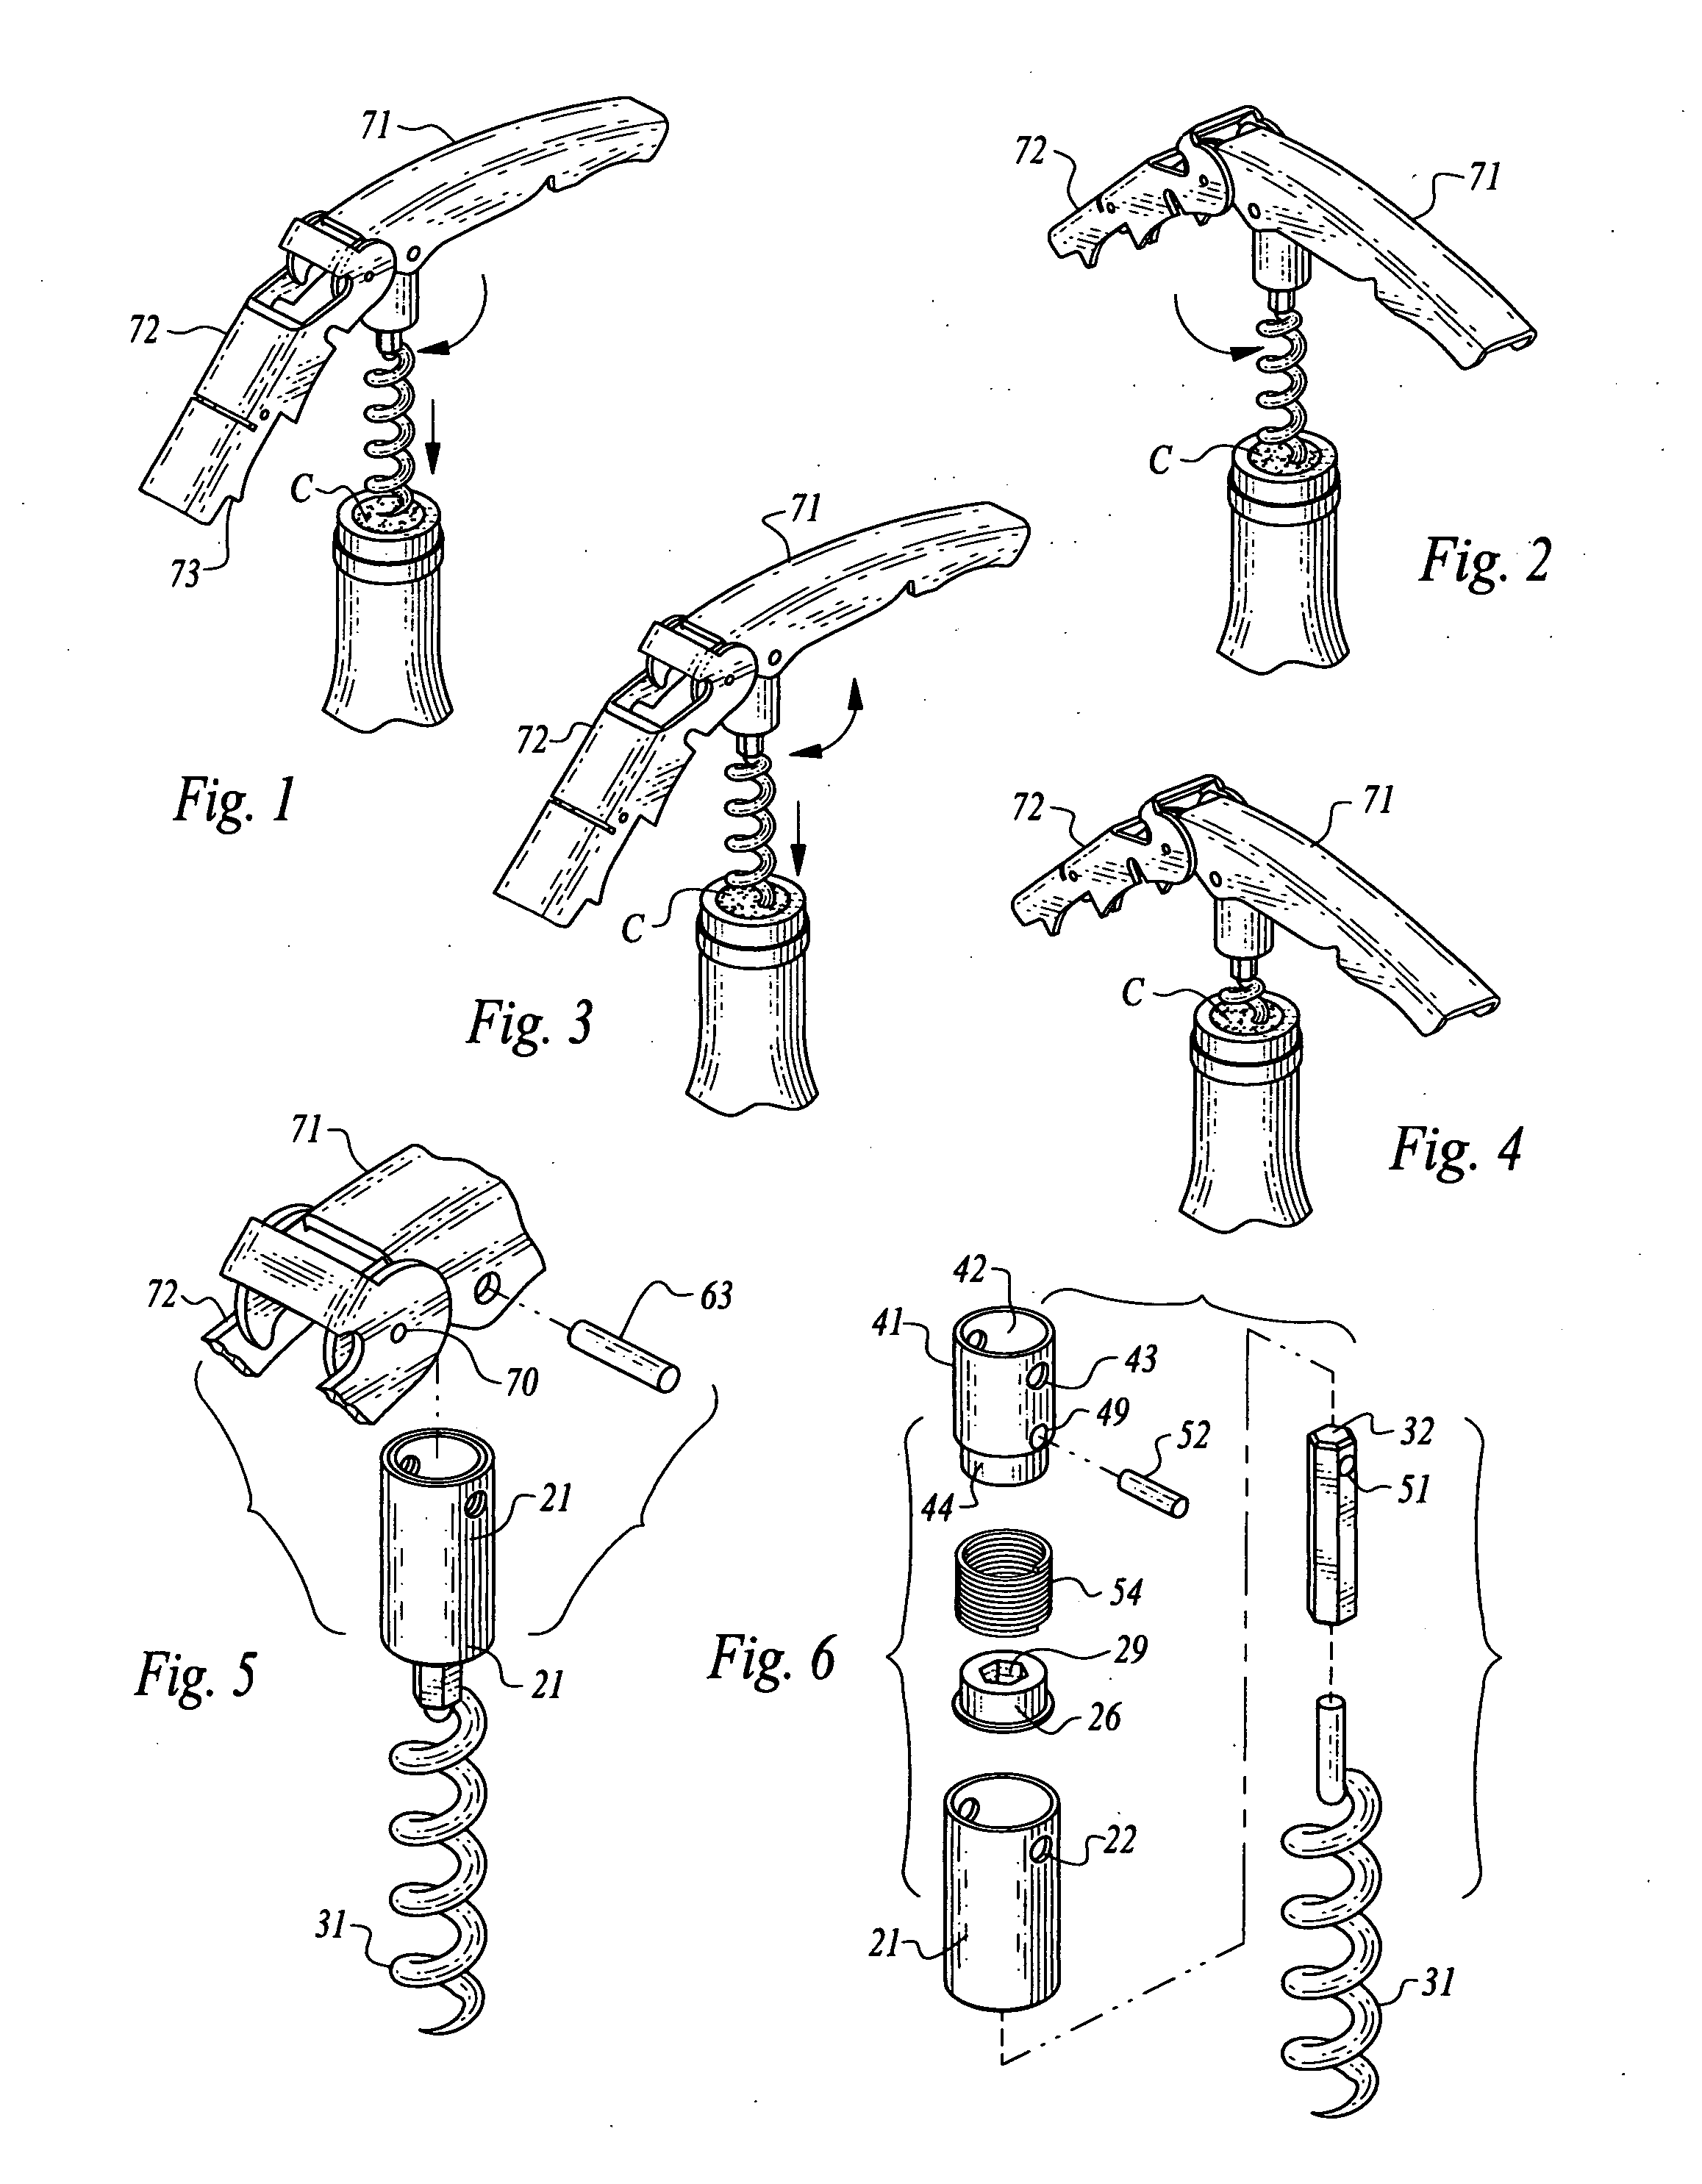 Corkscrew with unidirectional clutch drive